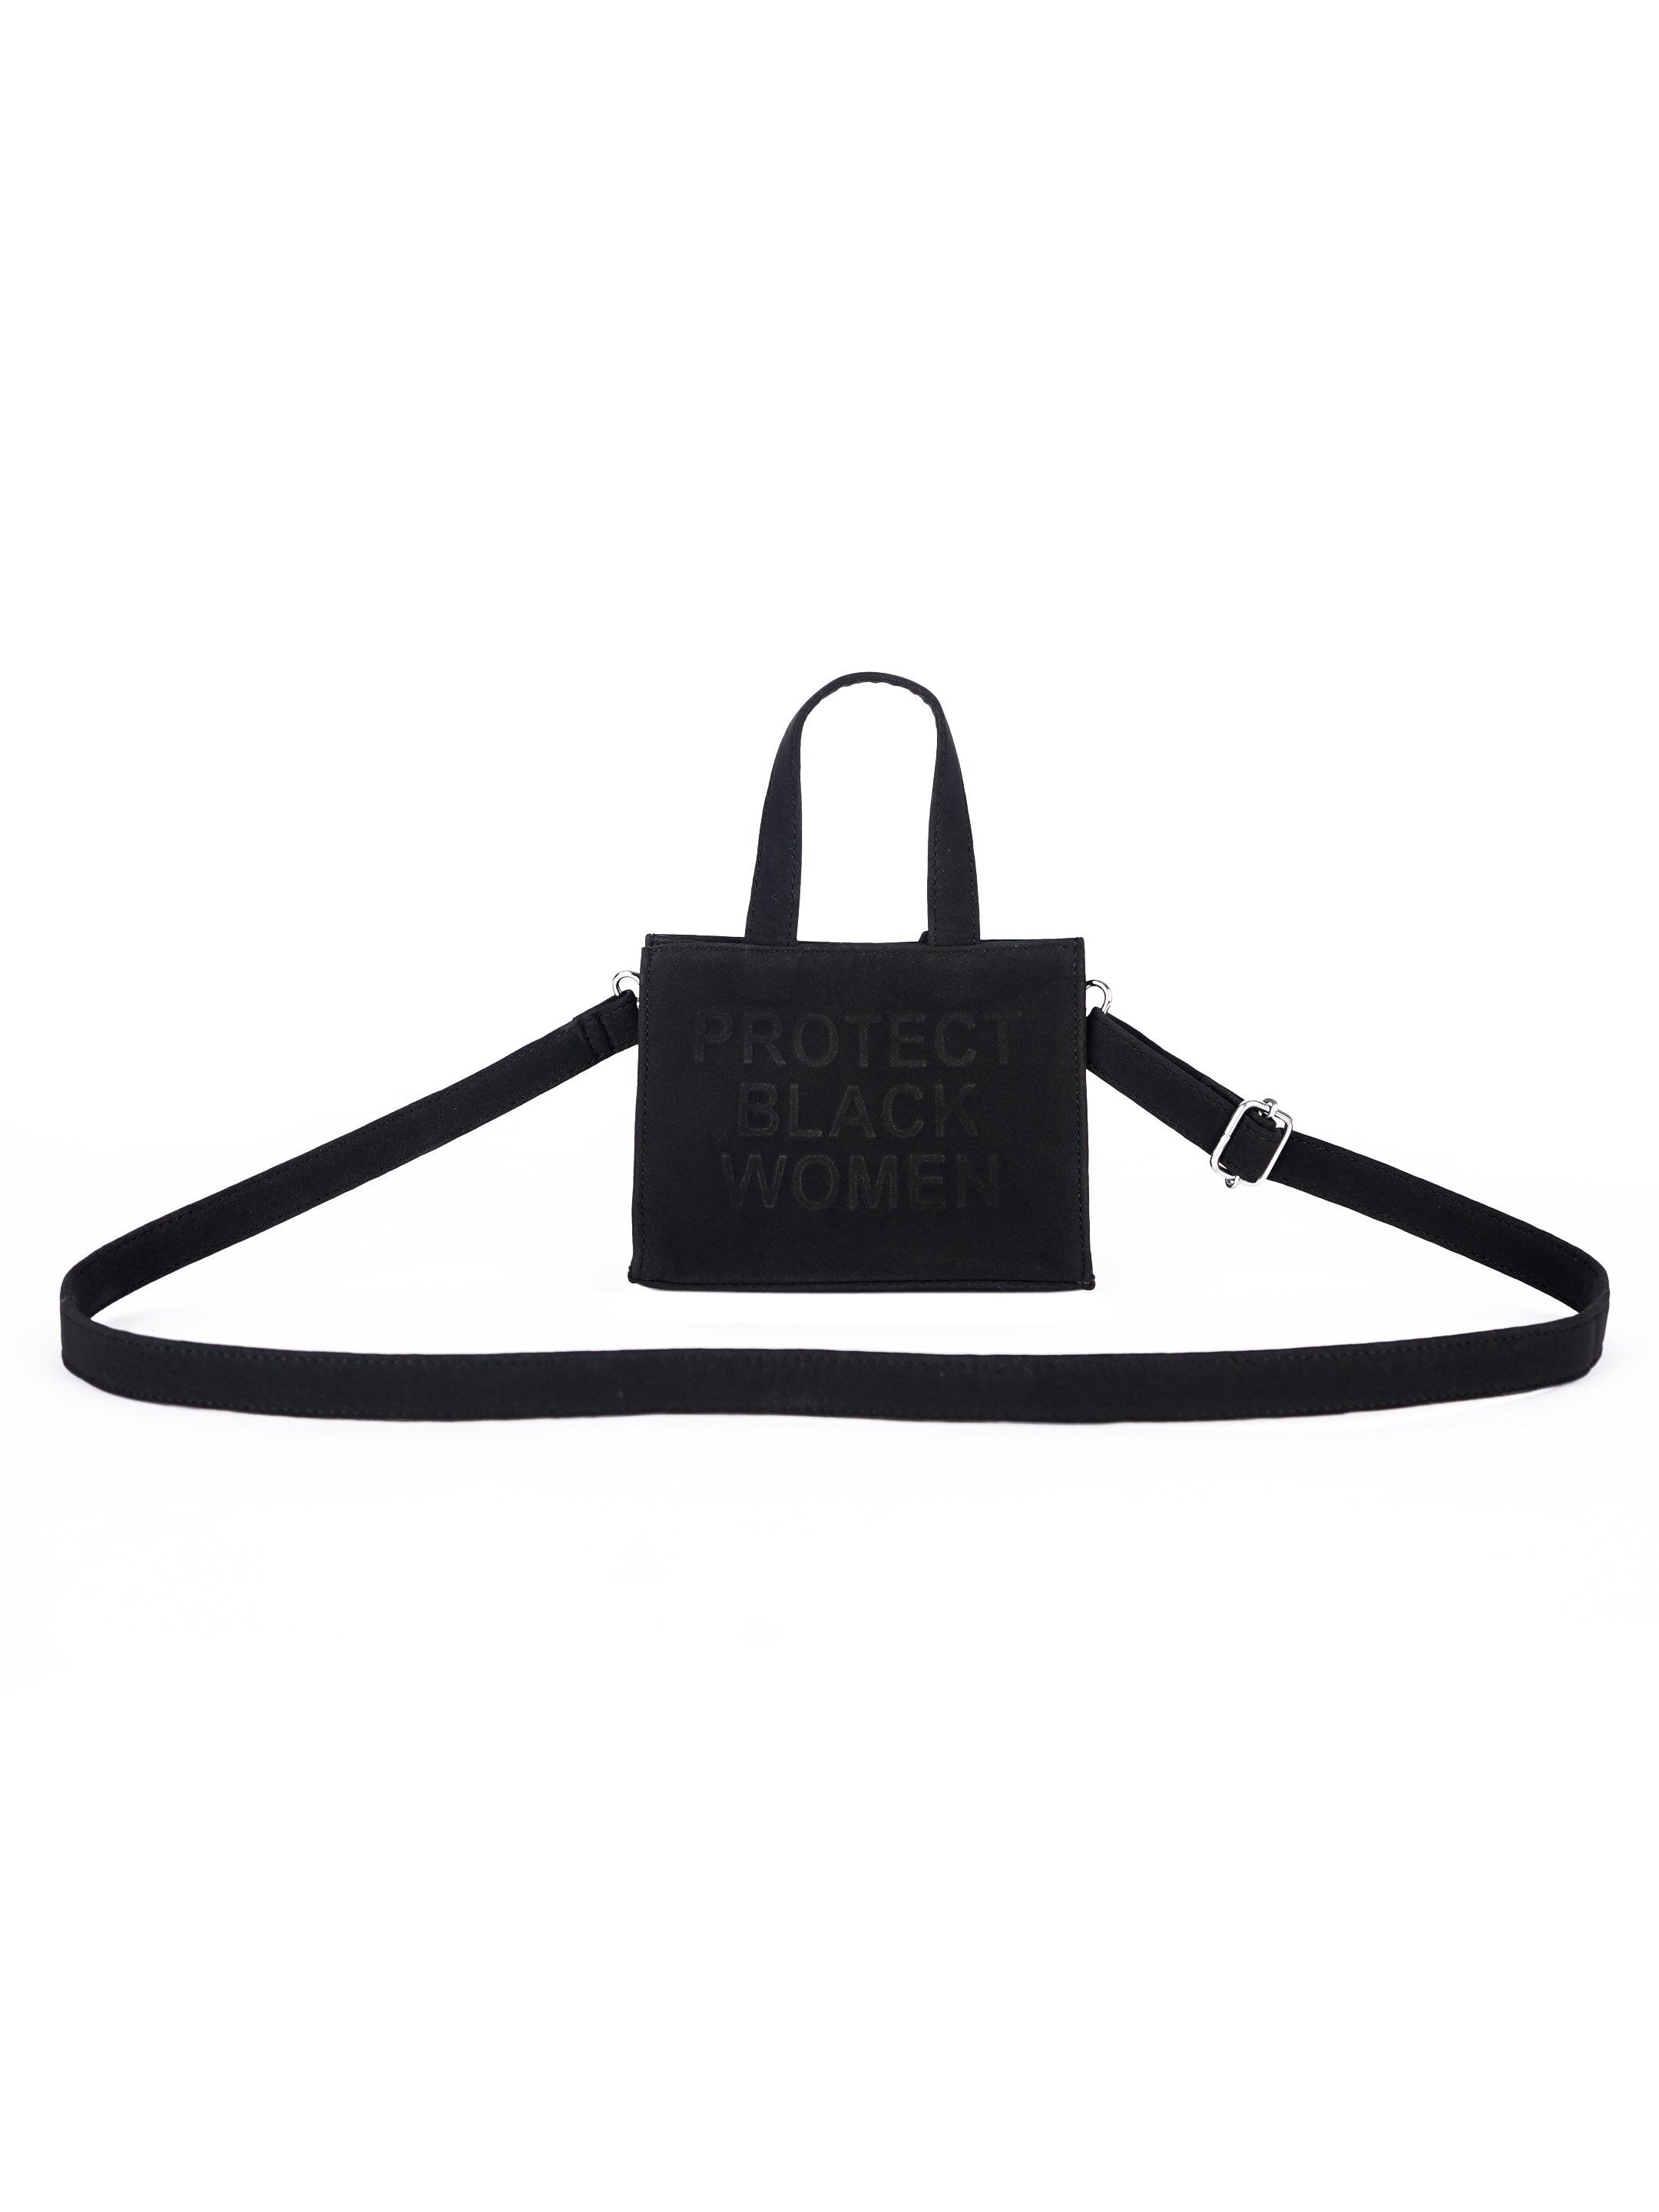 PBW - Vegan Suede Black Mini Bag 